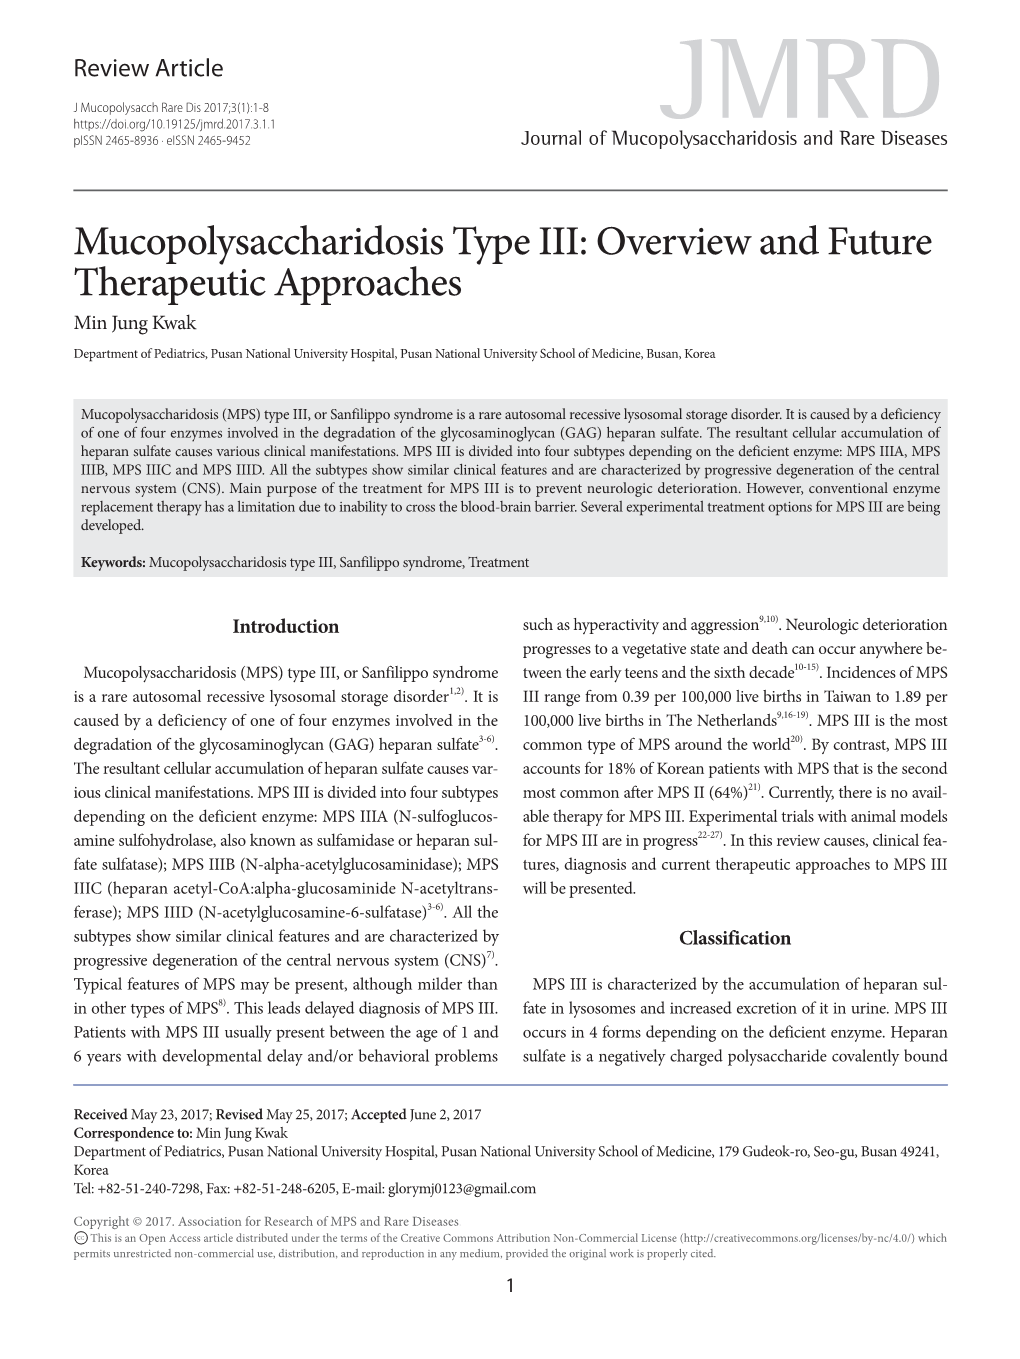 Mucopolysaccharidosis Type III, Sanfilippo Syndrome, Treatment